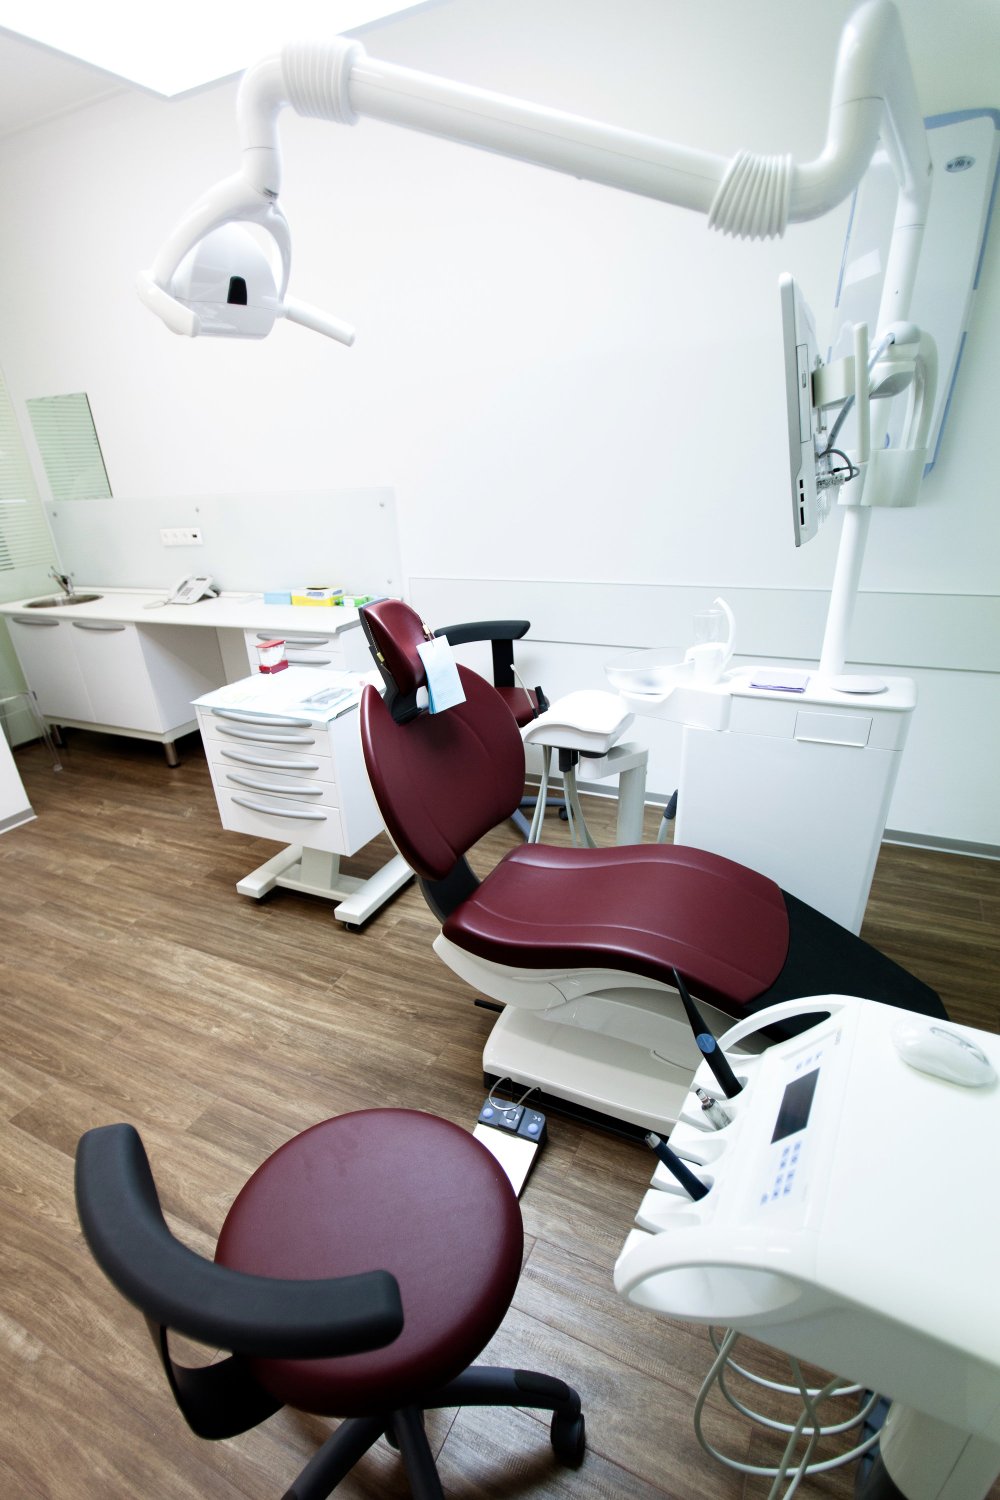 Стоматология Academic Dentistry